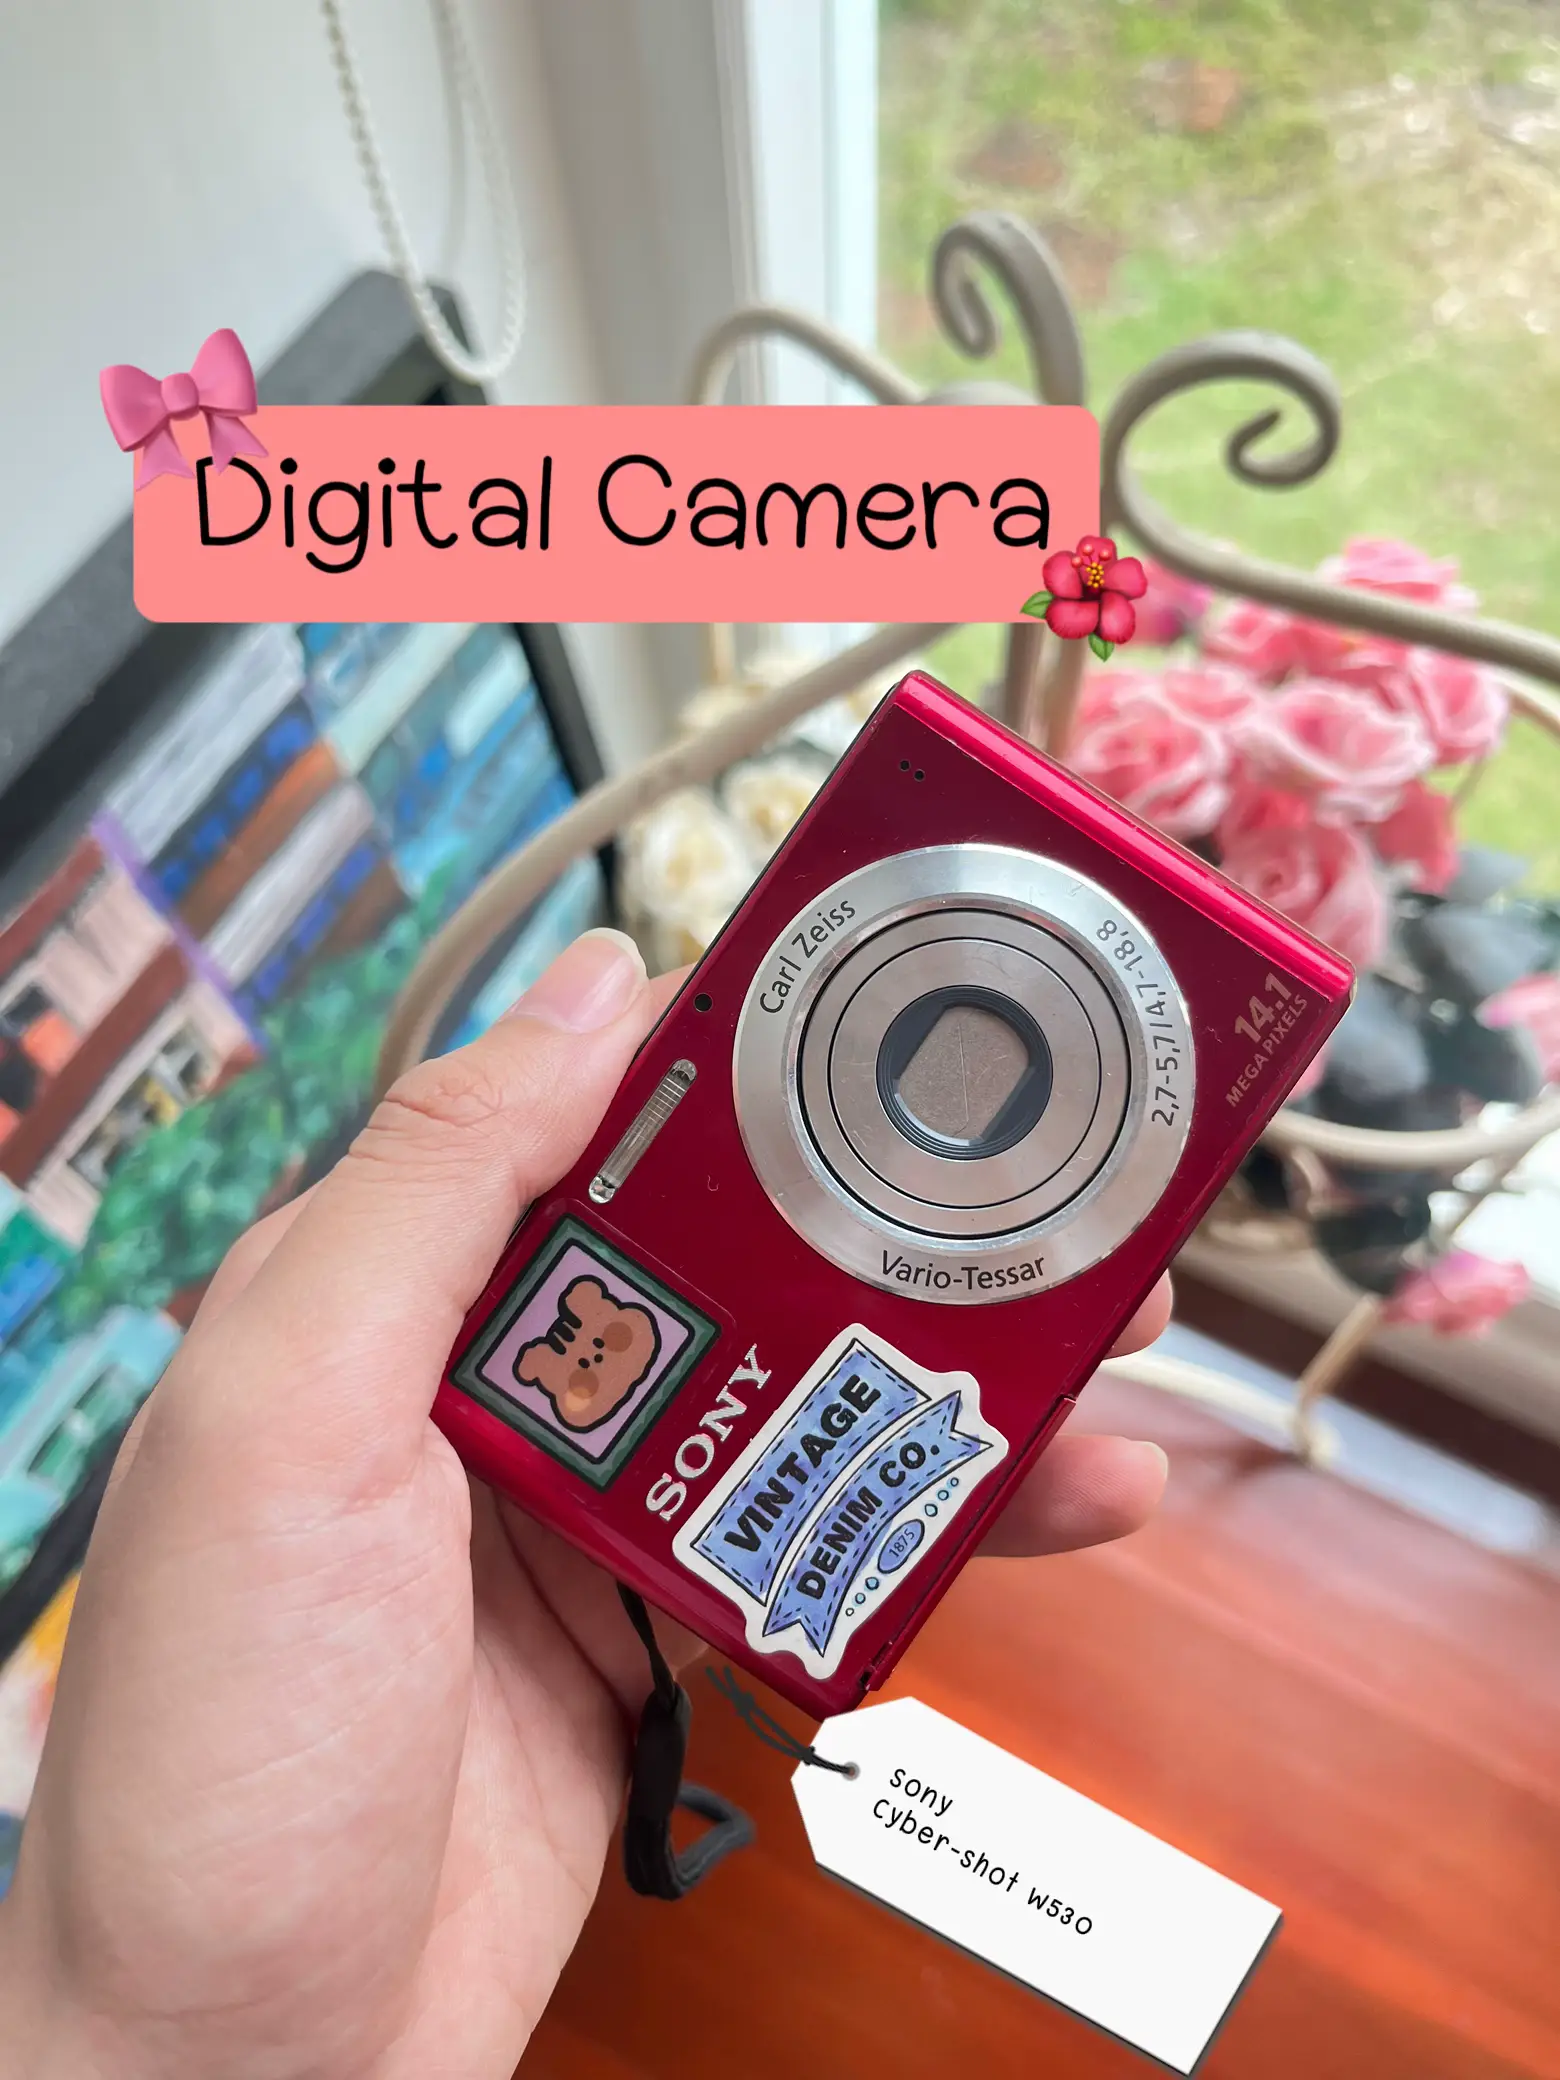 Digital Camera Sony Cyber-shot w530🎀✨, Gallery posted by Manthana K. ⑤⑤